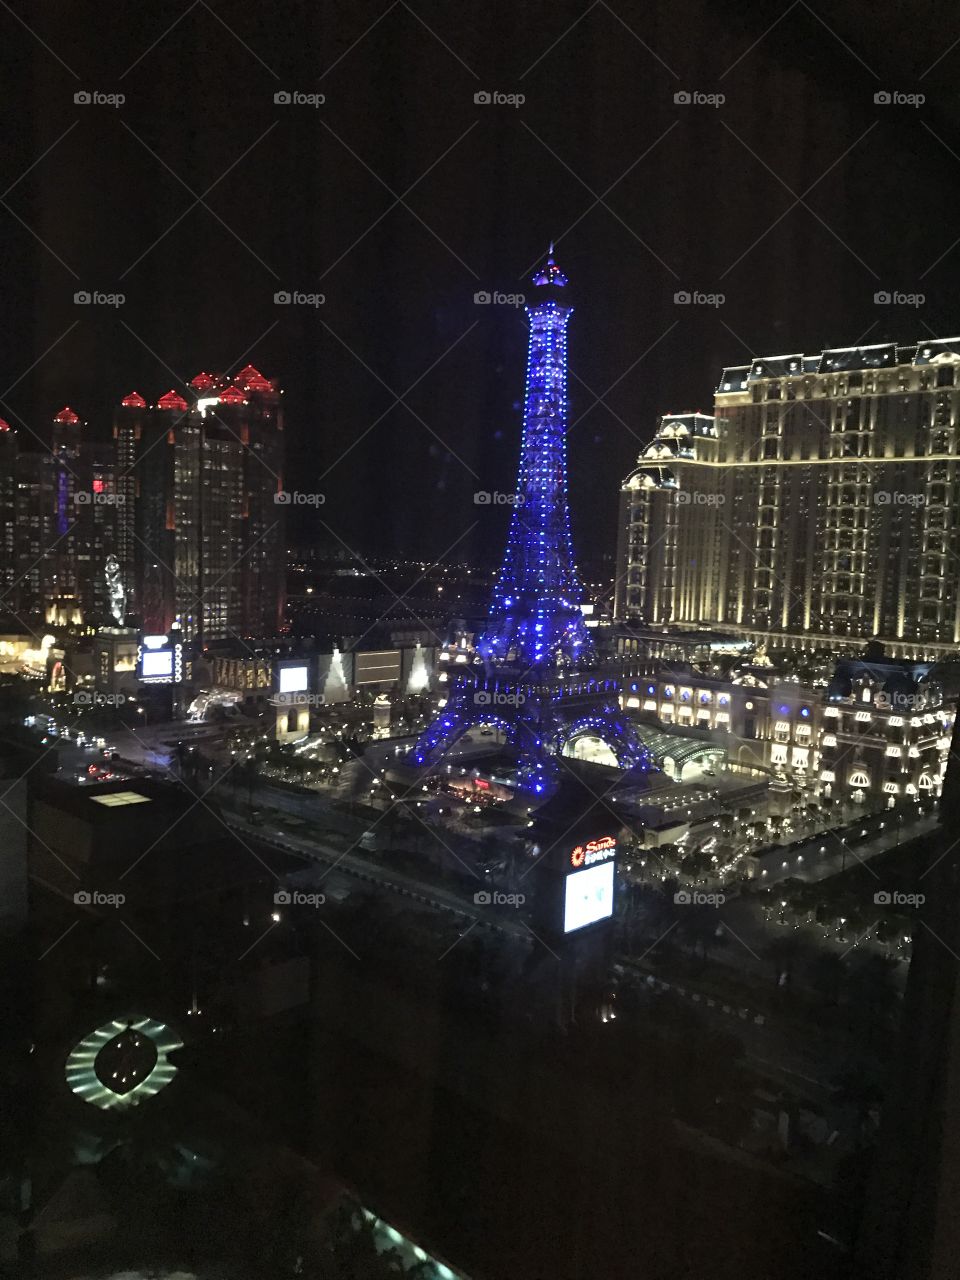 Eiffel Parisian at night